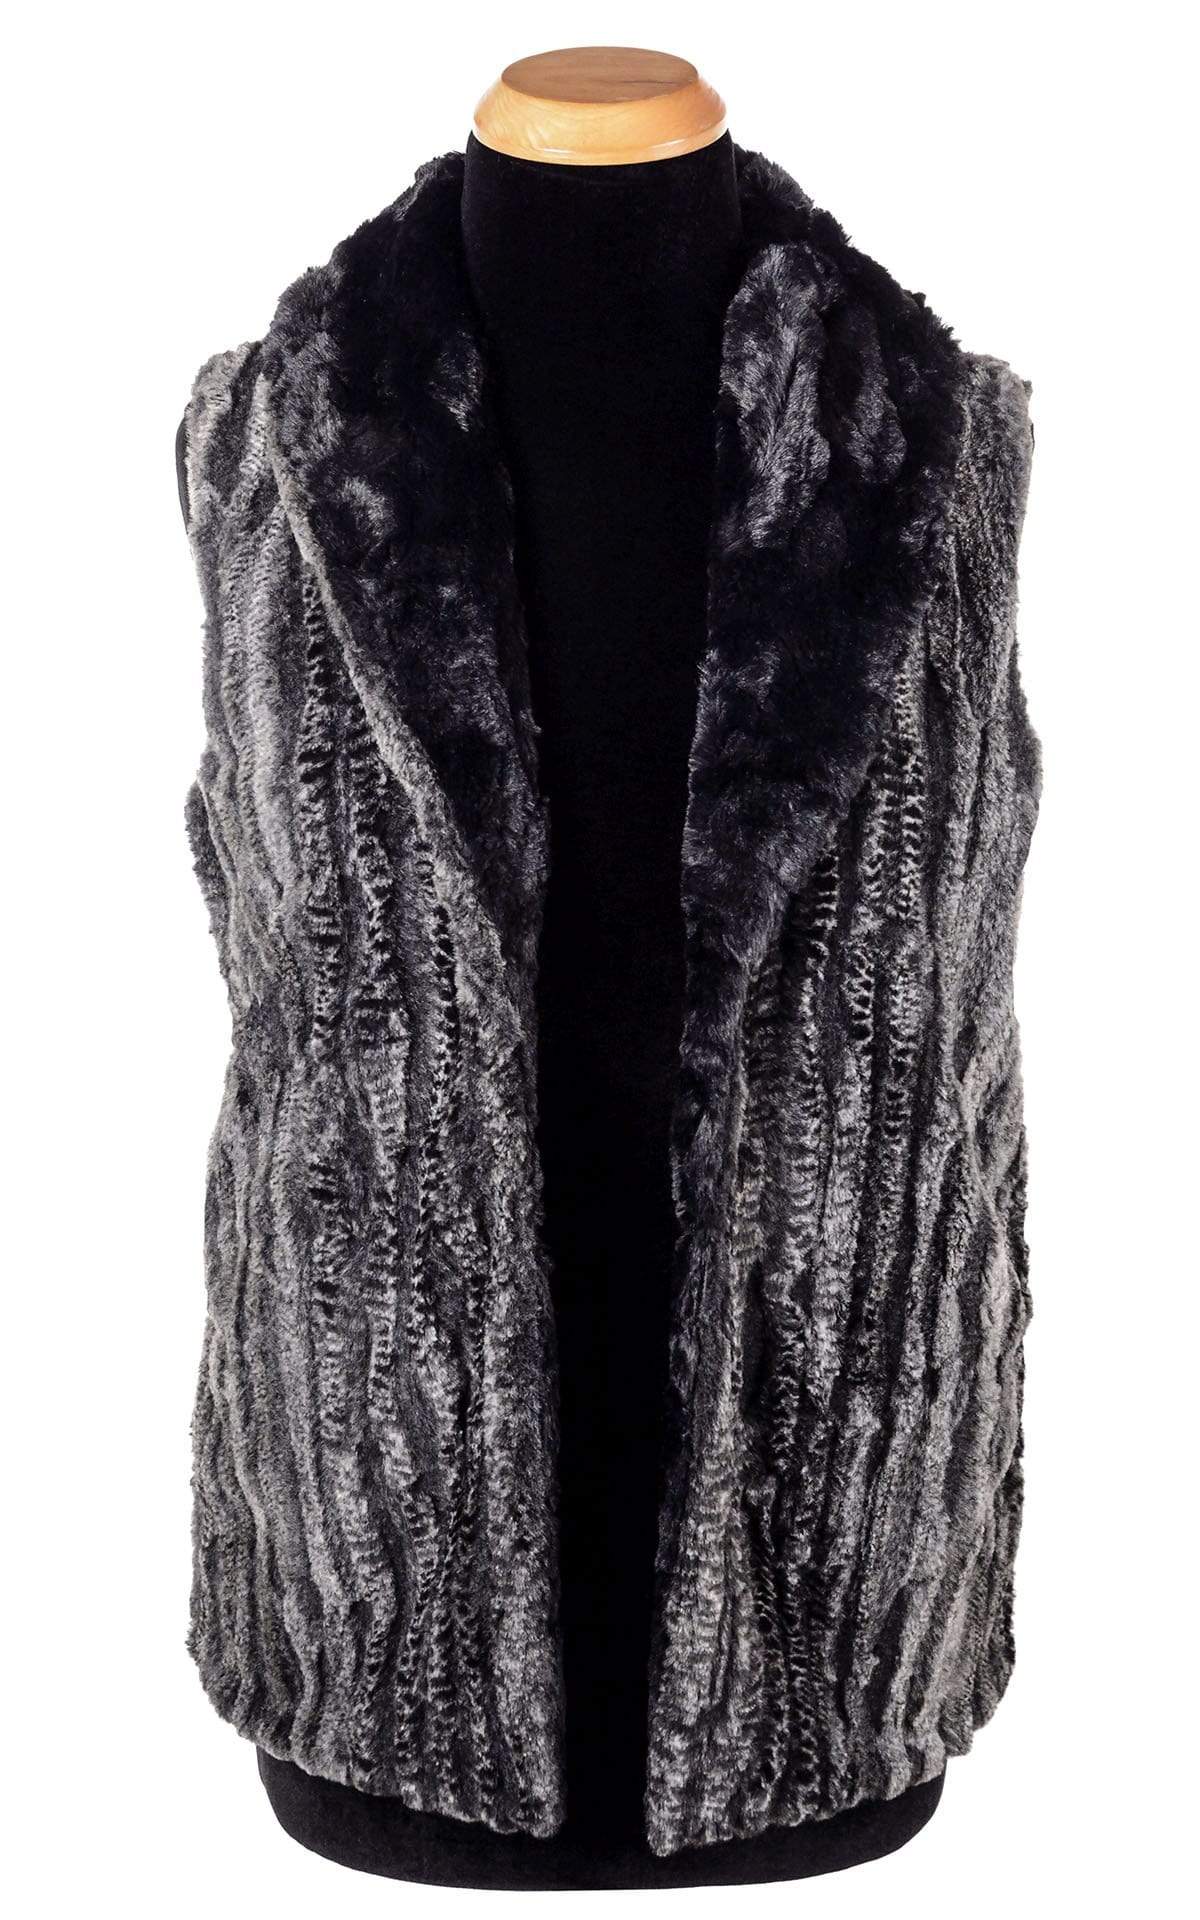 Shawl Collar Vest - Luxury Faux Fur in Rattle N Shake with Cuddly Fur in Black